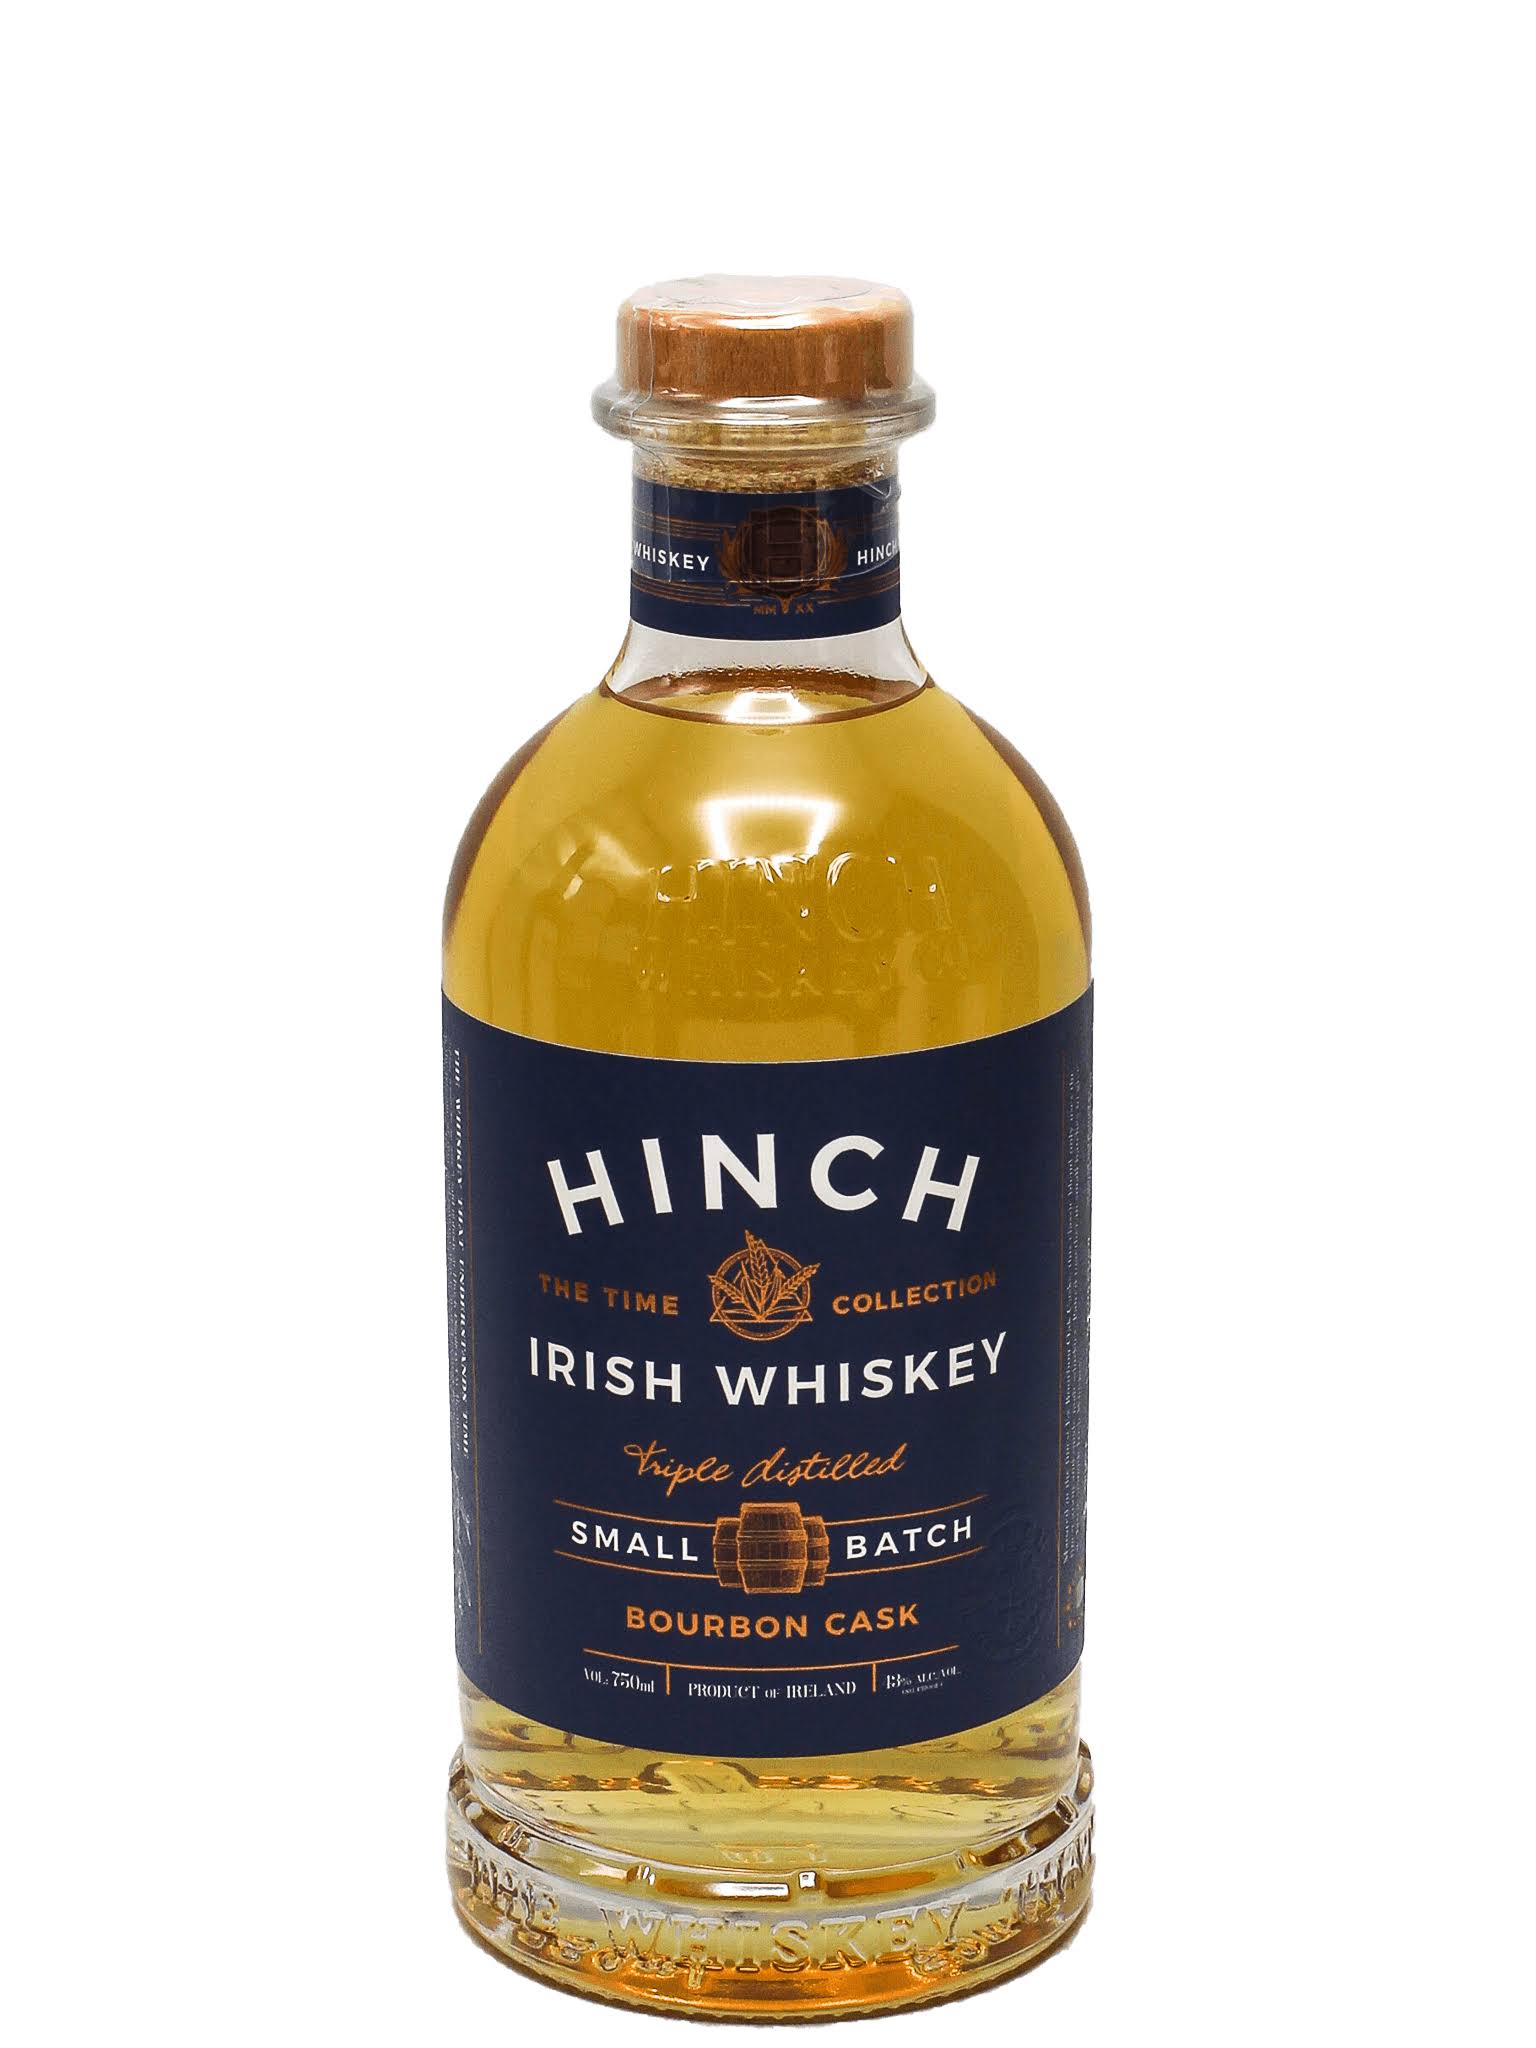 Hinch Small Batch Bourbon Cask Irish Whiskey - 750 ml